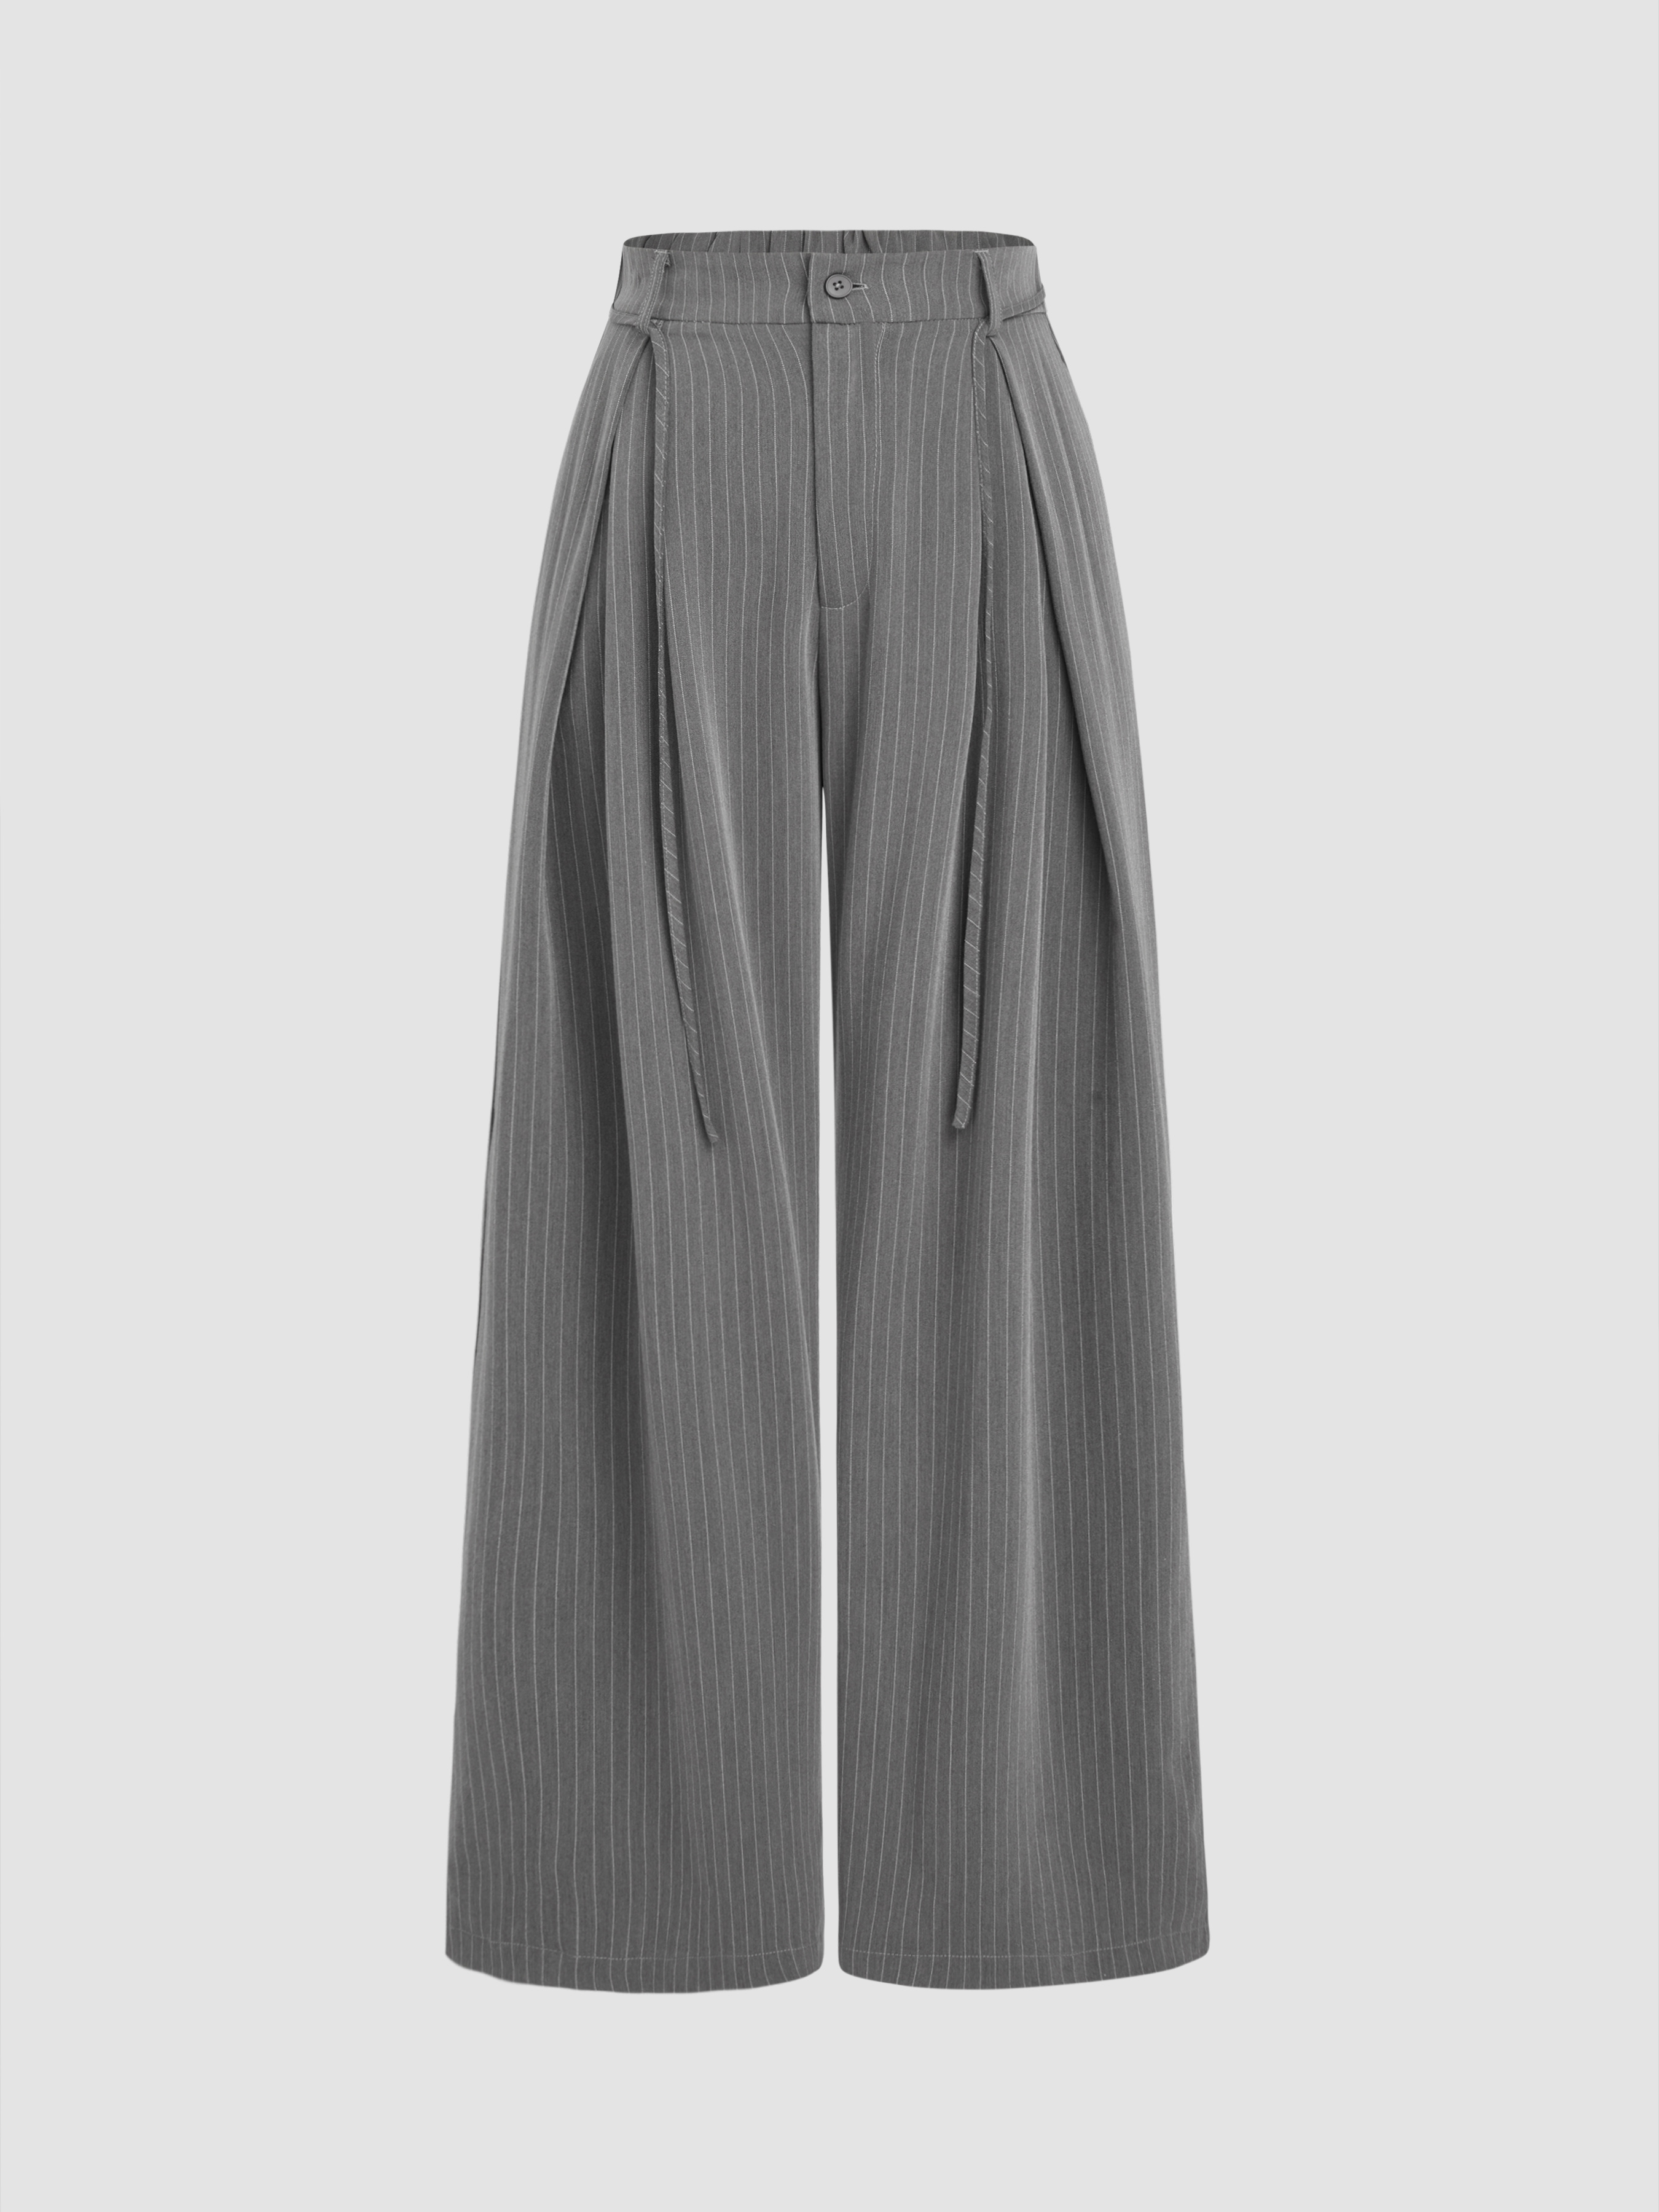 Victoria Beckham Ladies Black High-waist Pleated Trousers | eBay